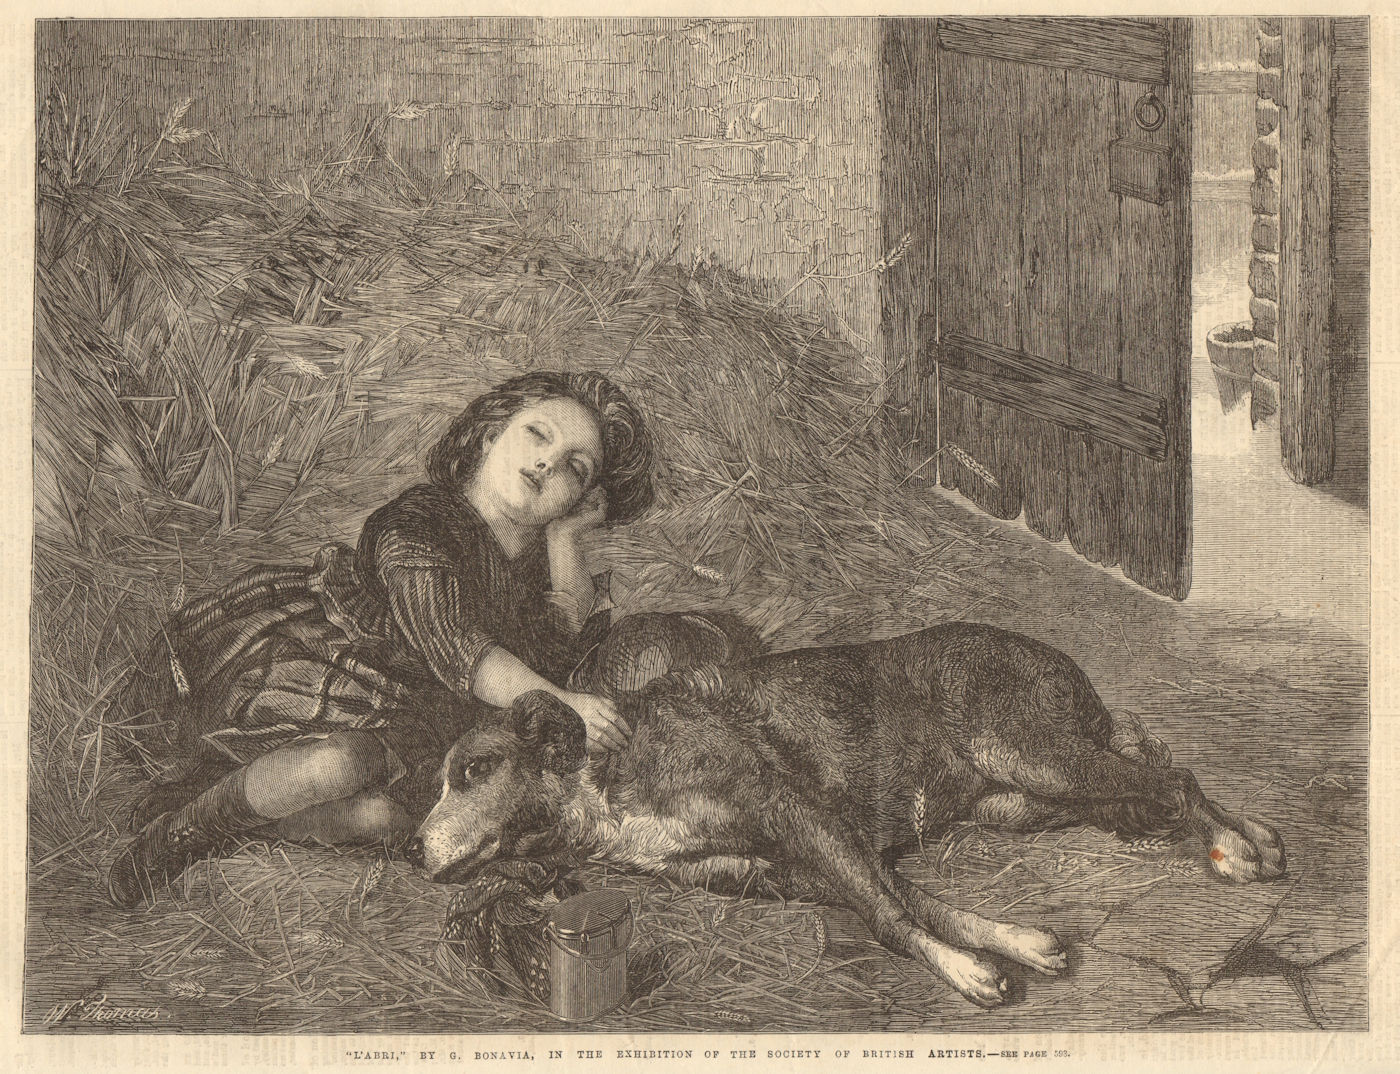 Associate Product "L'Abri" by G. Bonavia. Dogs. Children 1867 antique ILN full page print